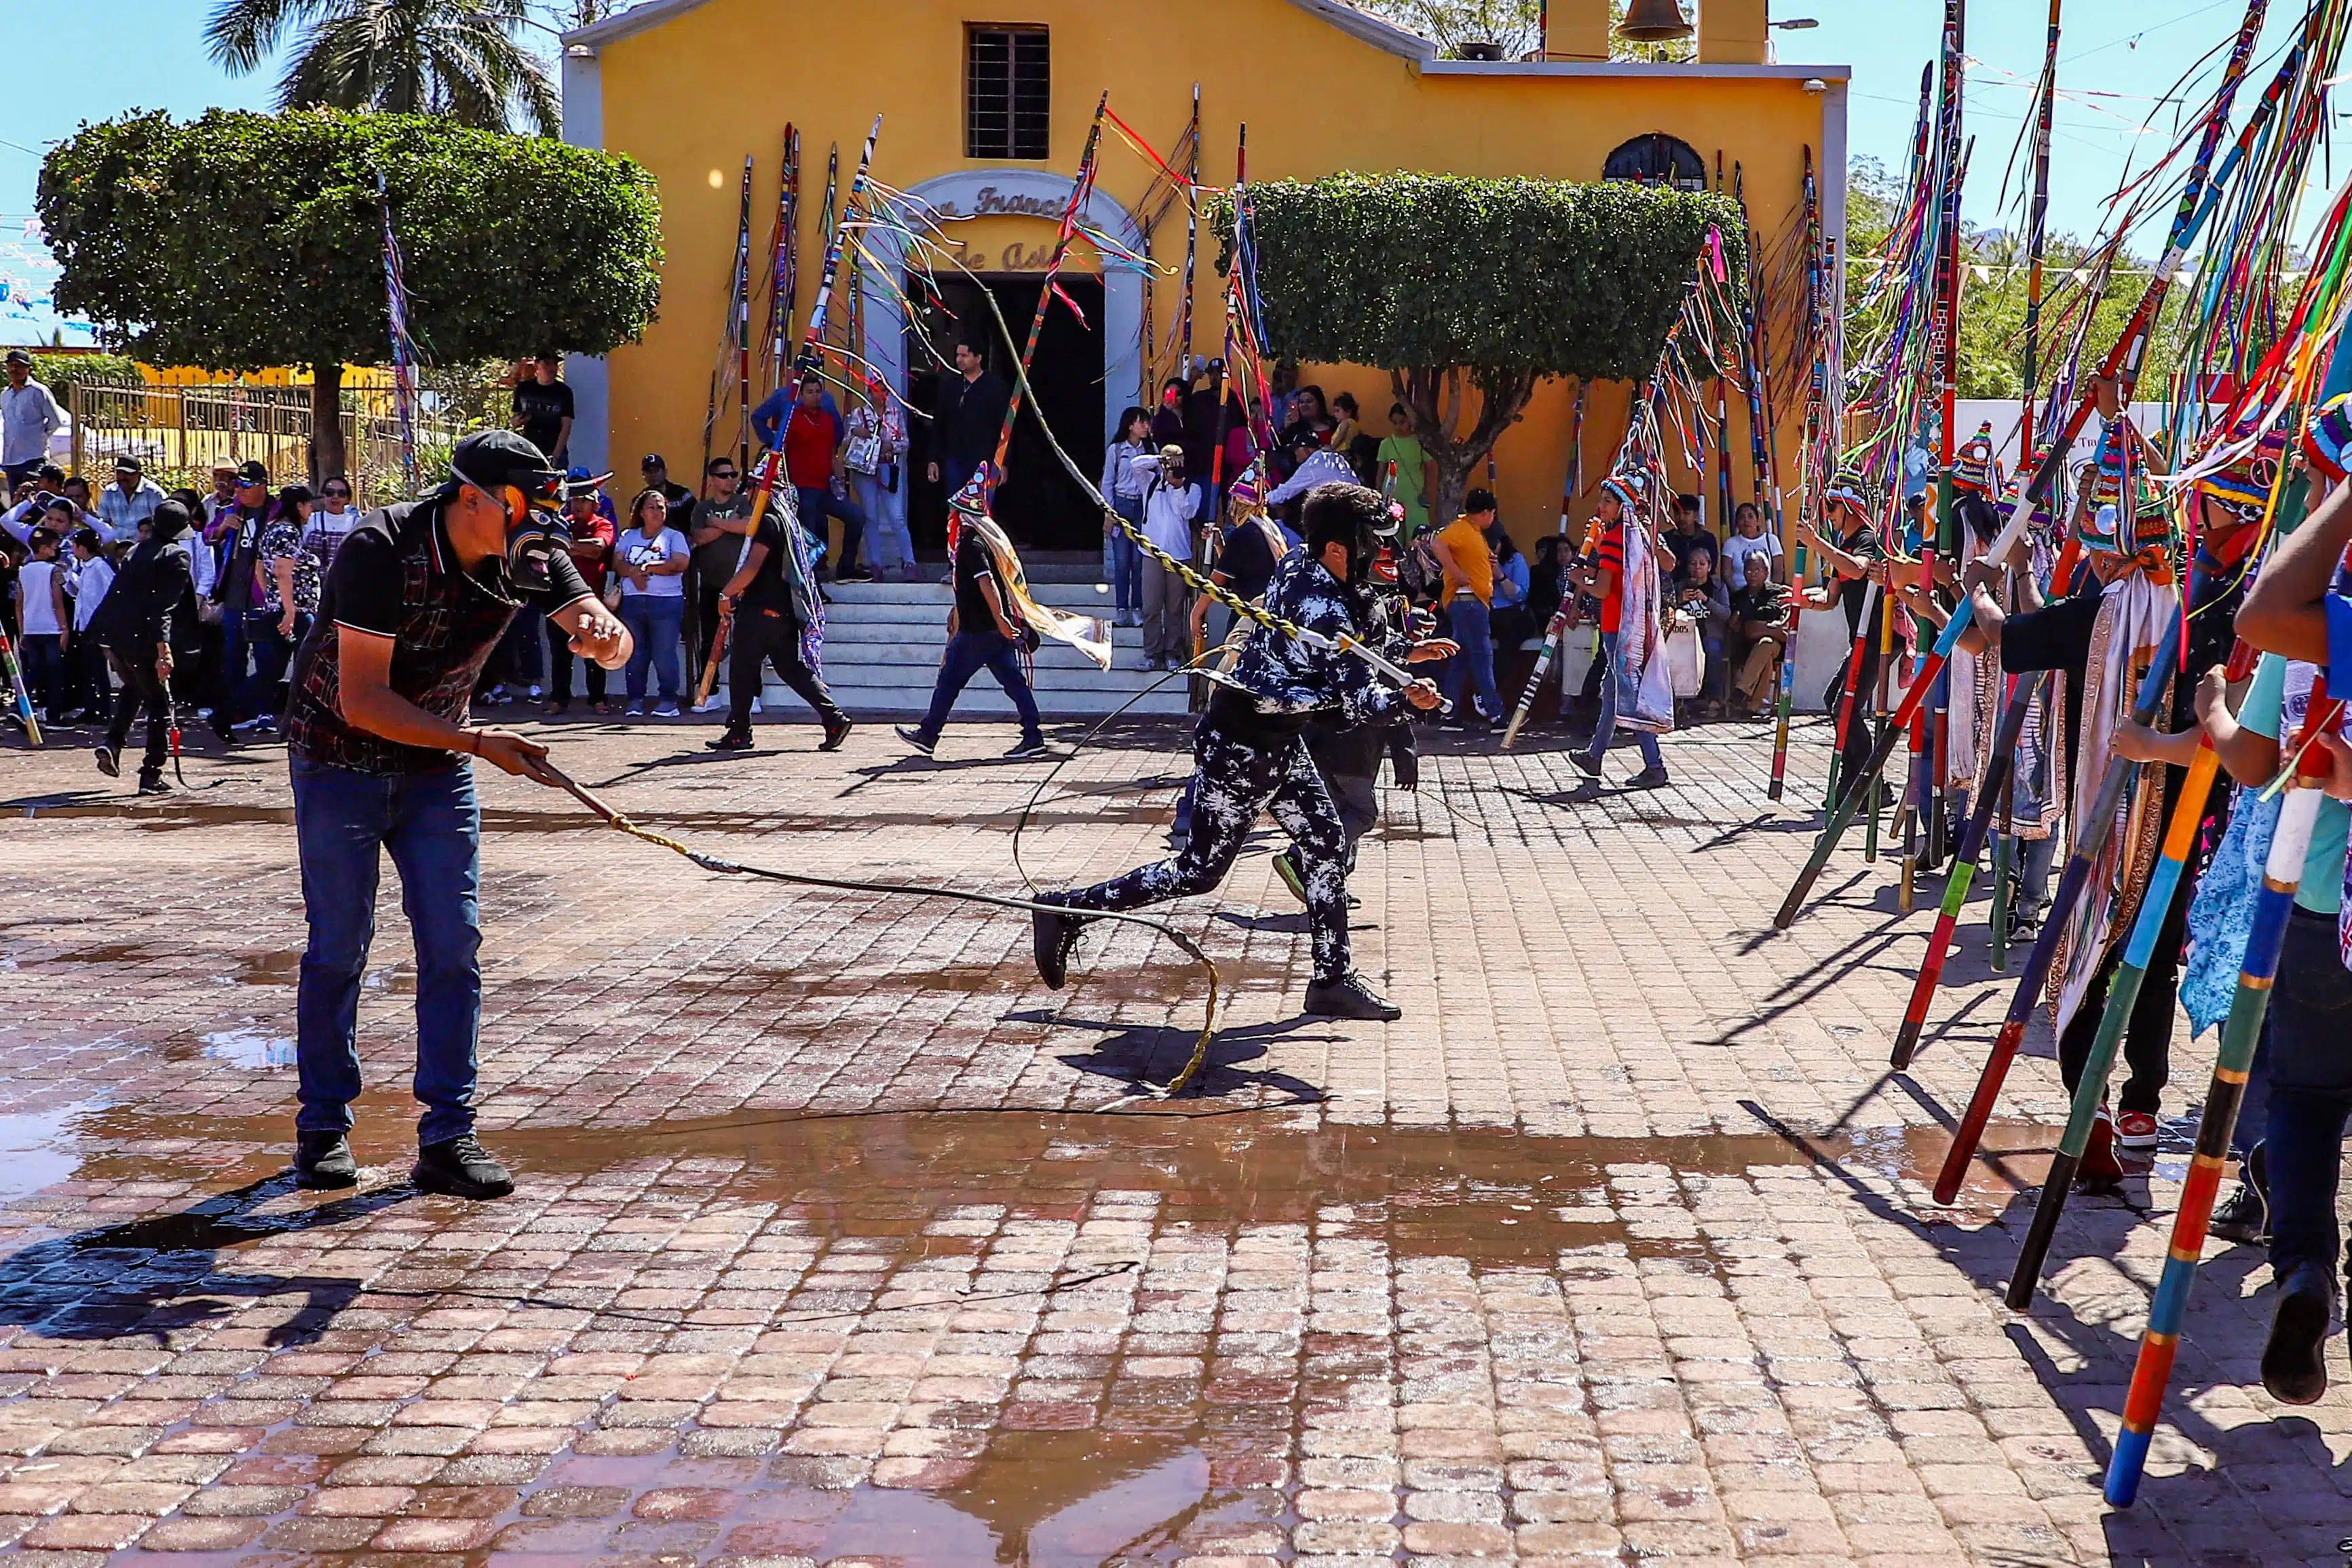 Representación del viacrucis en Tacuichamona, culiacán.